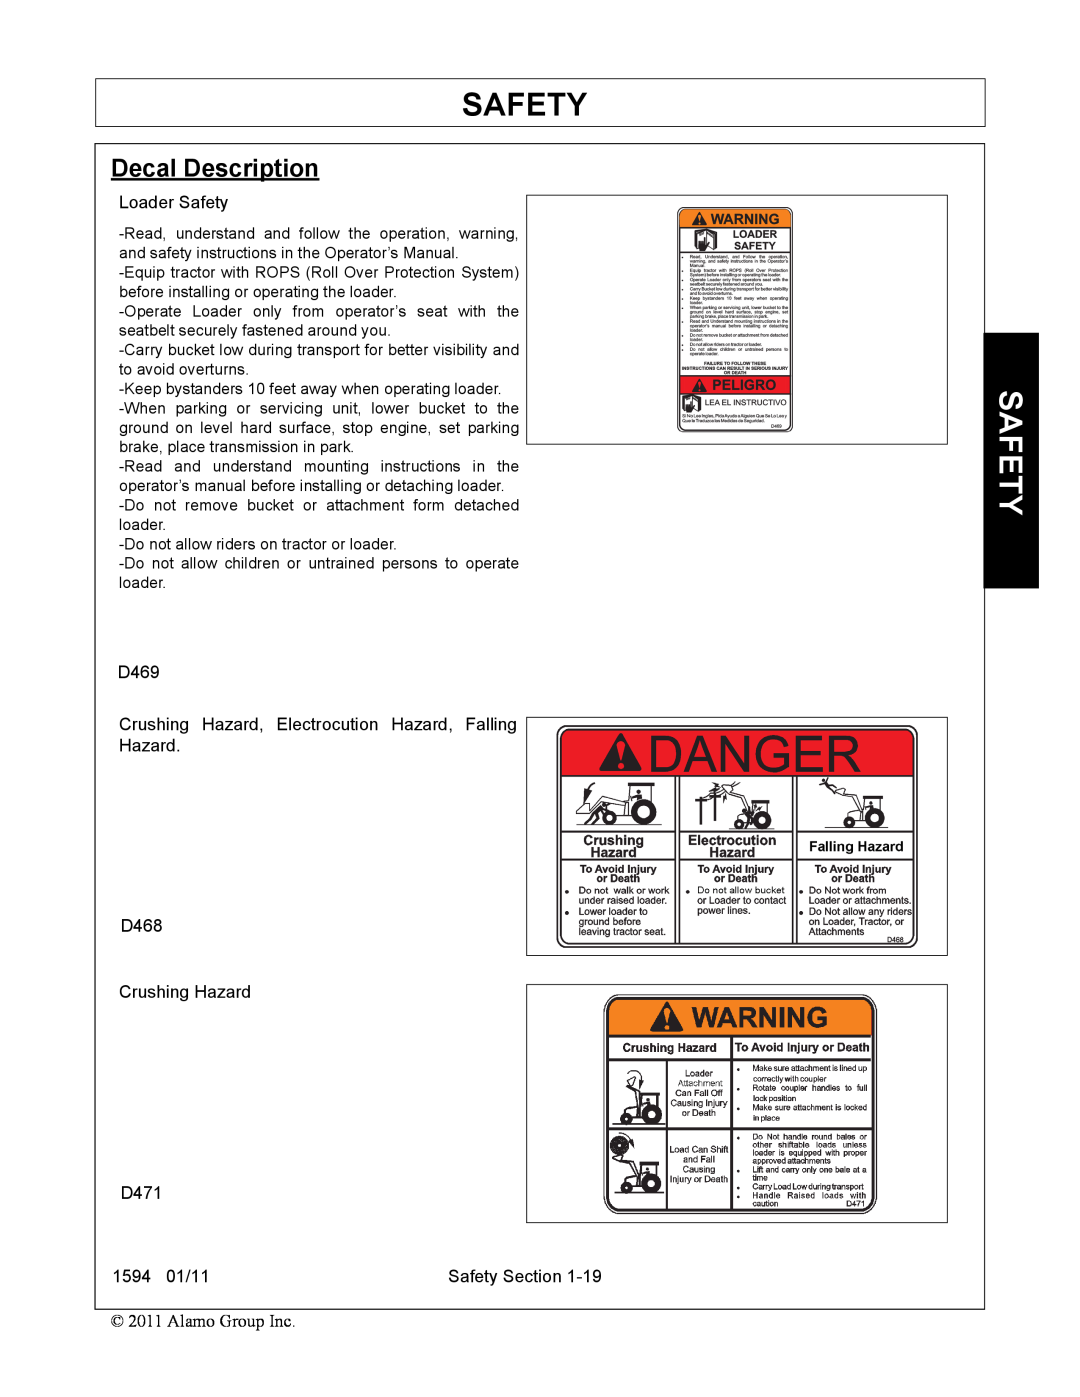 Rhino Mounts 1594 manual Safety, Decal Description 